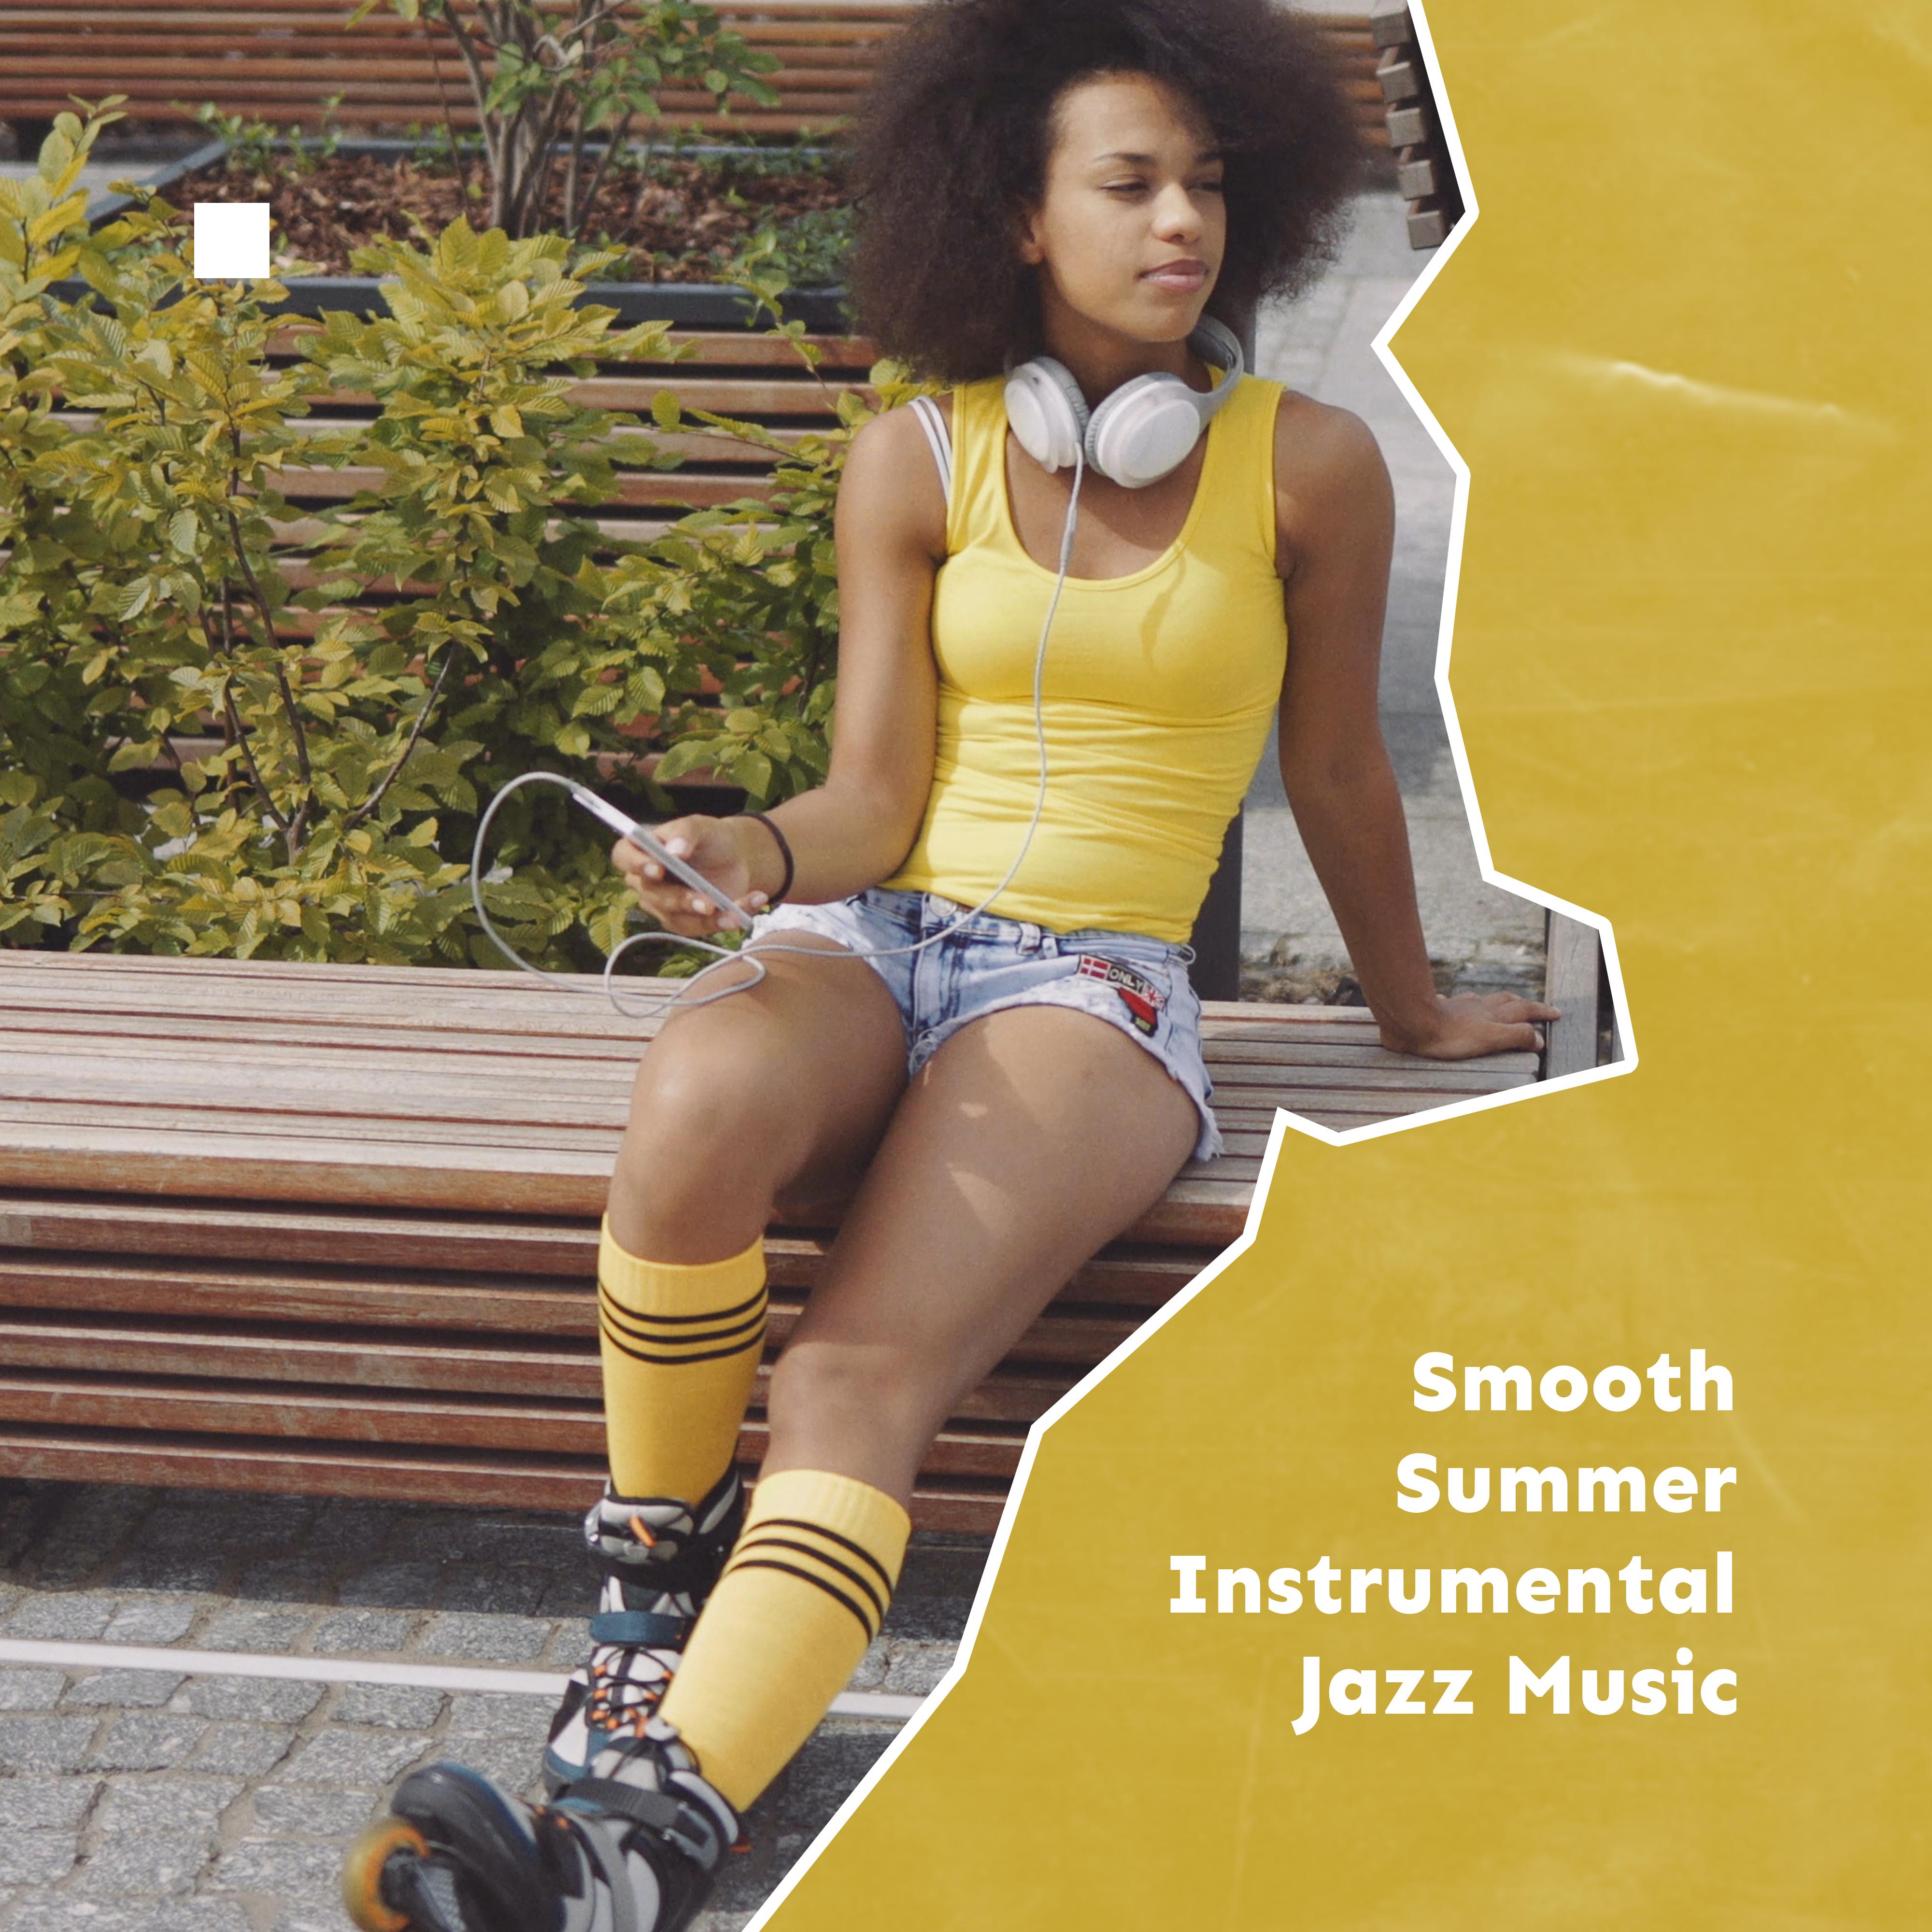 Smooth Summer Instrumental Jazz Music: Hot Compilation of Vacation Tracks for Summer 2019